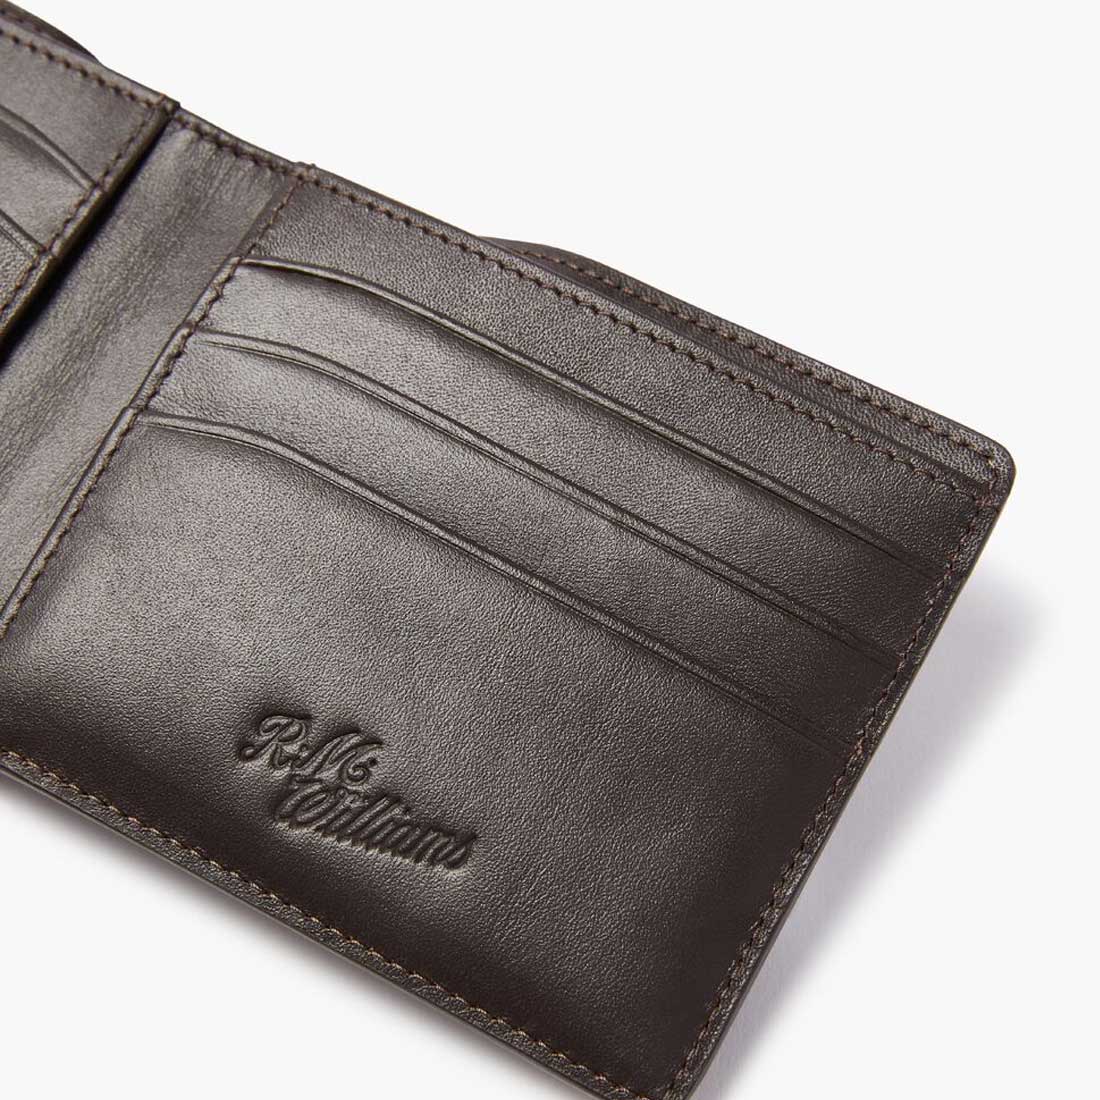 RM WILLIAMS Bi-Fold Wallet - Men's City Slim Leather - Chocolate